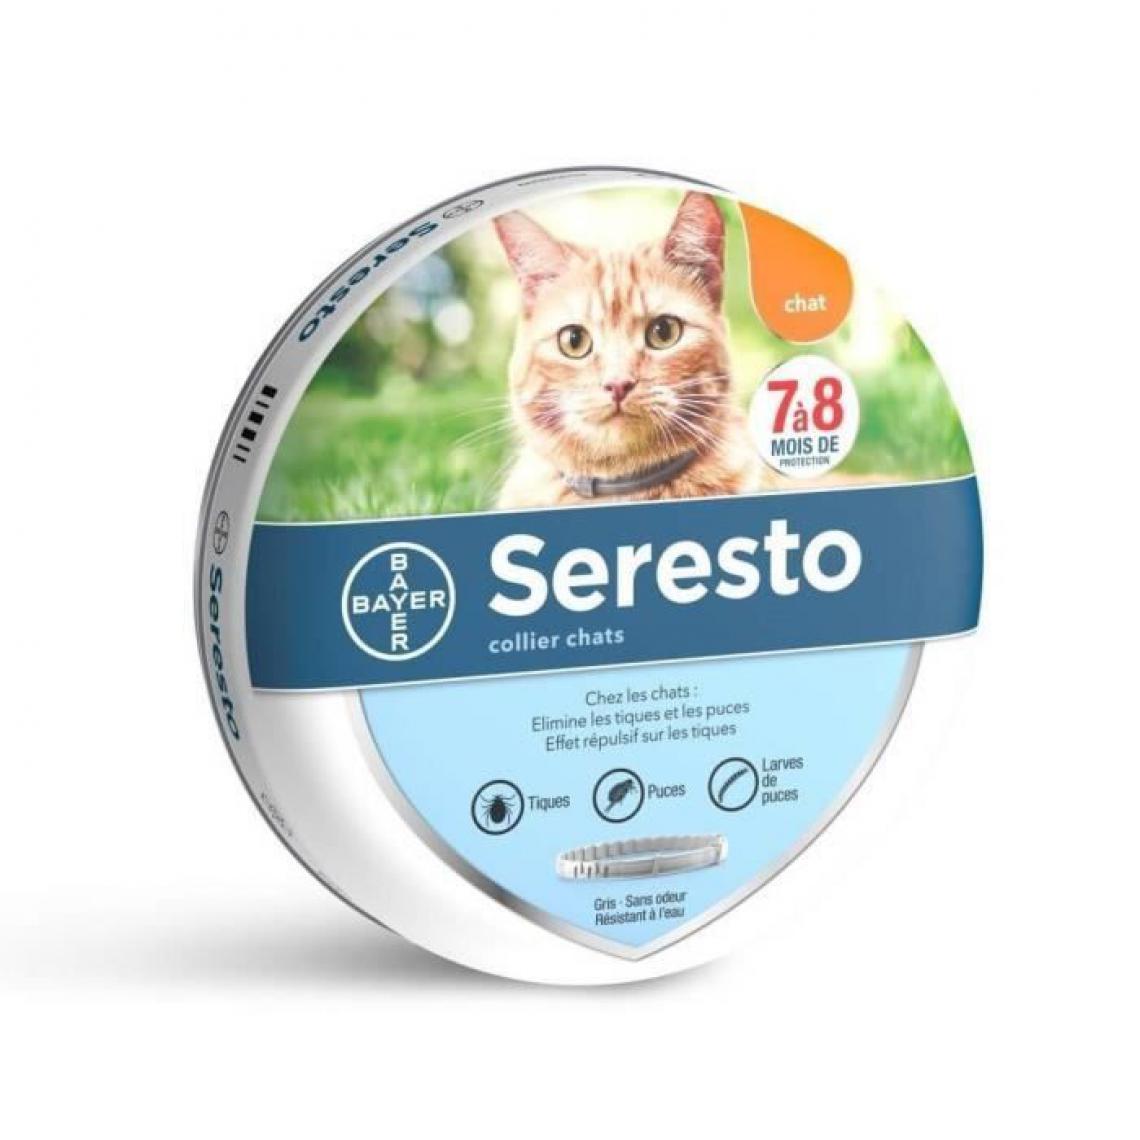 Seresto - SERESTO Collier antiparasitaire - Pour chat - Anti-parasitaire pour chat